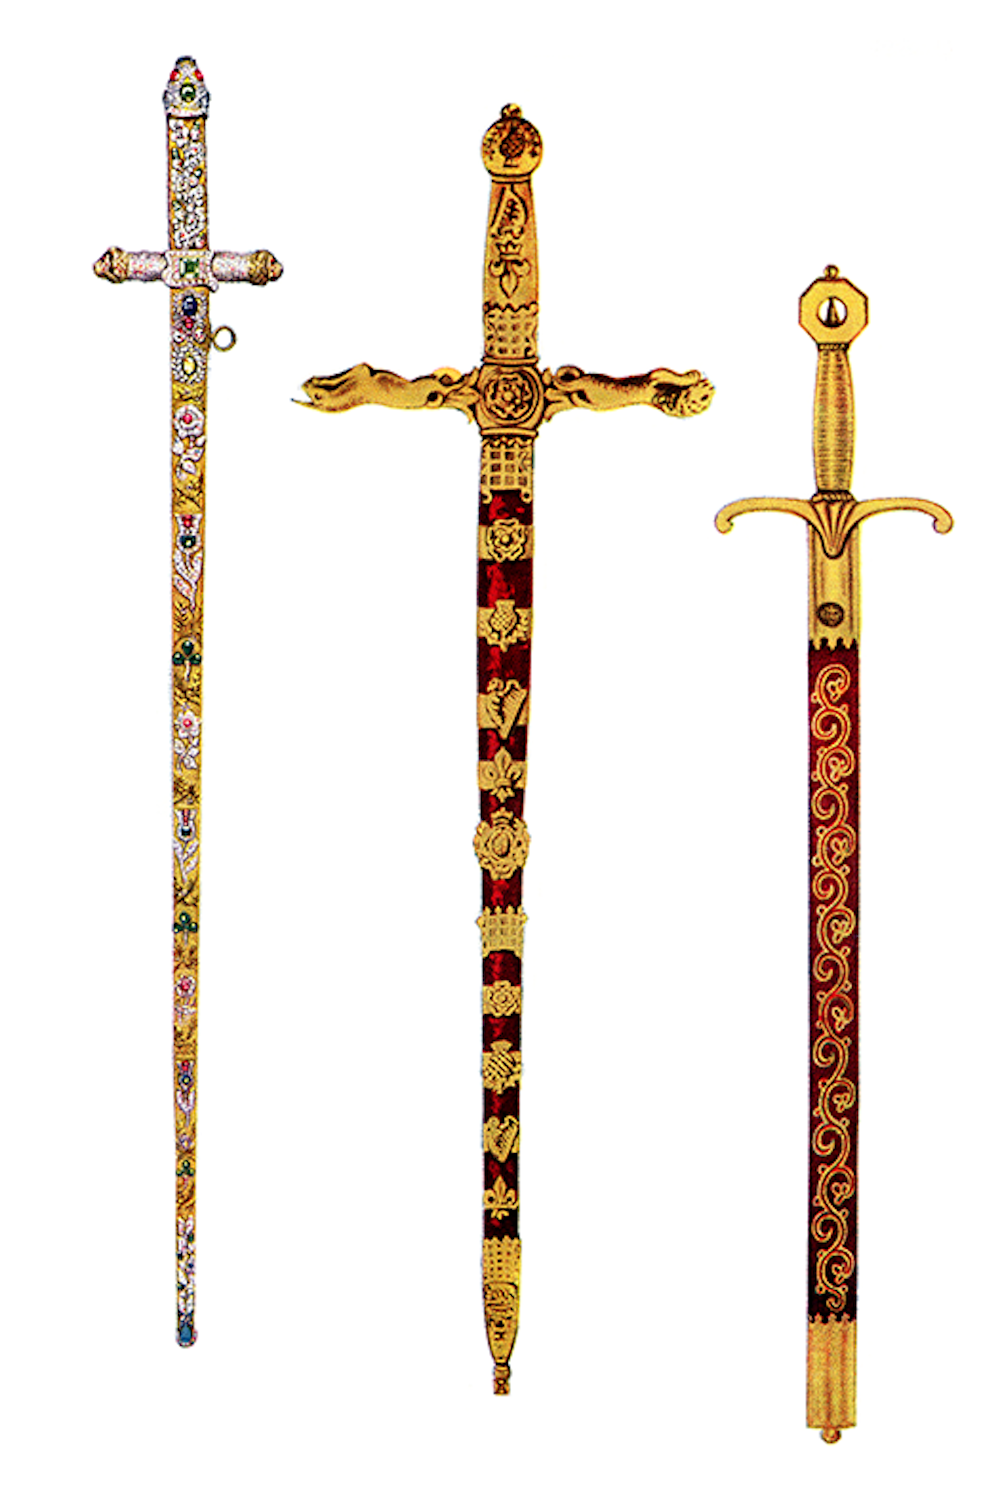 British Crown Jewels: Coronation Swords. Photo Credit: © Public Domain via Wikimedia Commons.